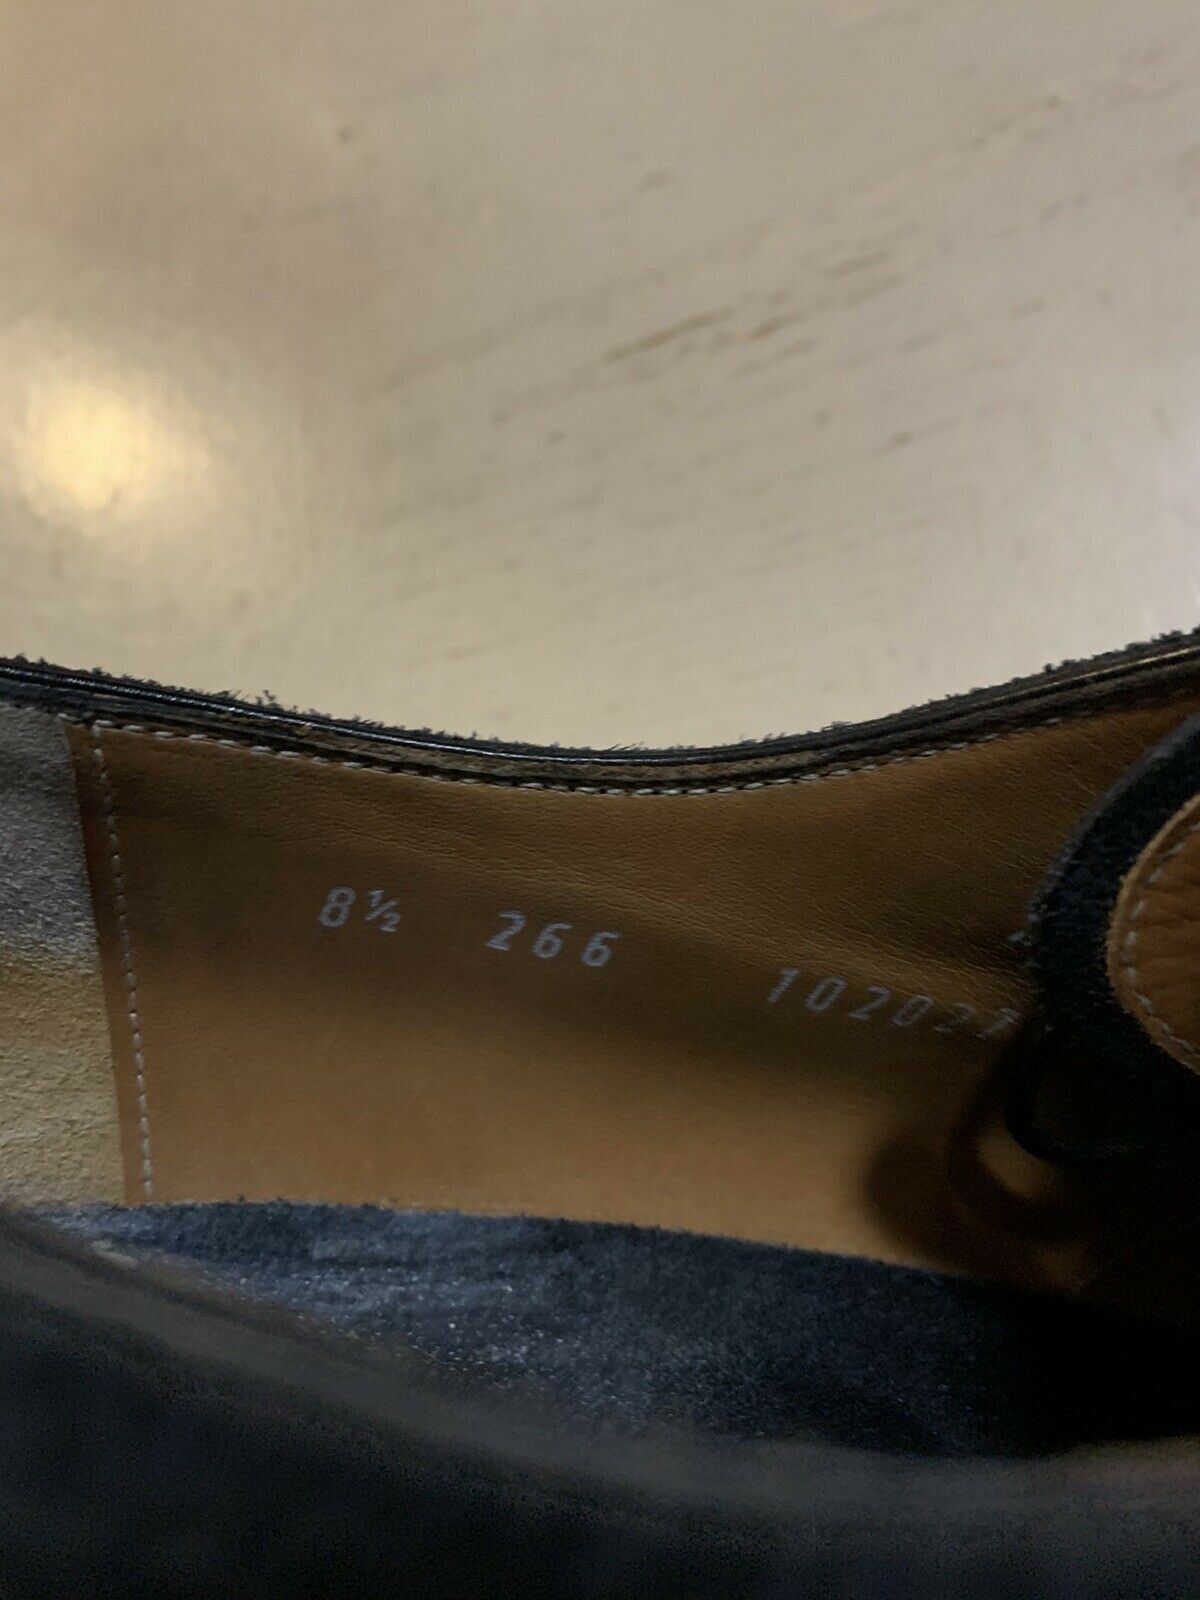 $795 Barrett Men Suede Shoes Multi-color 9.5 US ( 42.5 Eu ) Italy